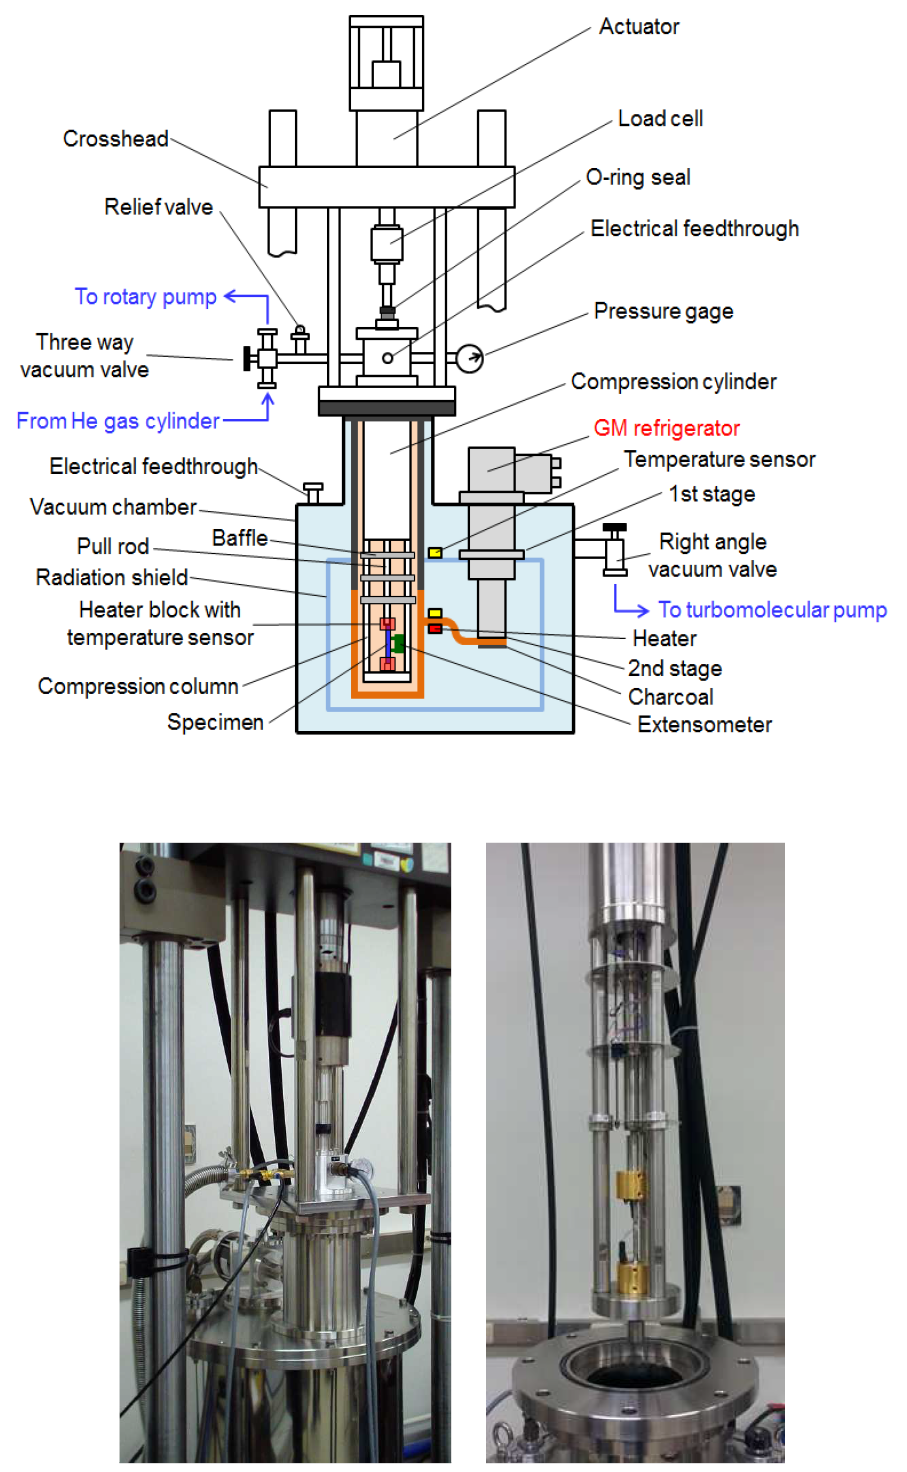 Mechanical testing cryostat using a 4K G-M refrigerator